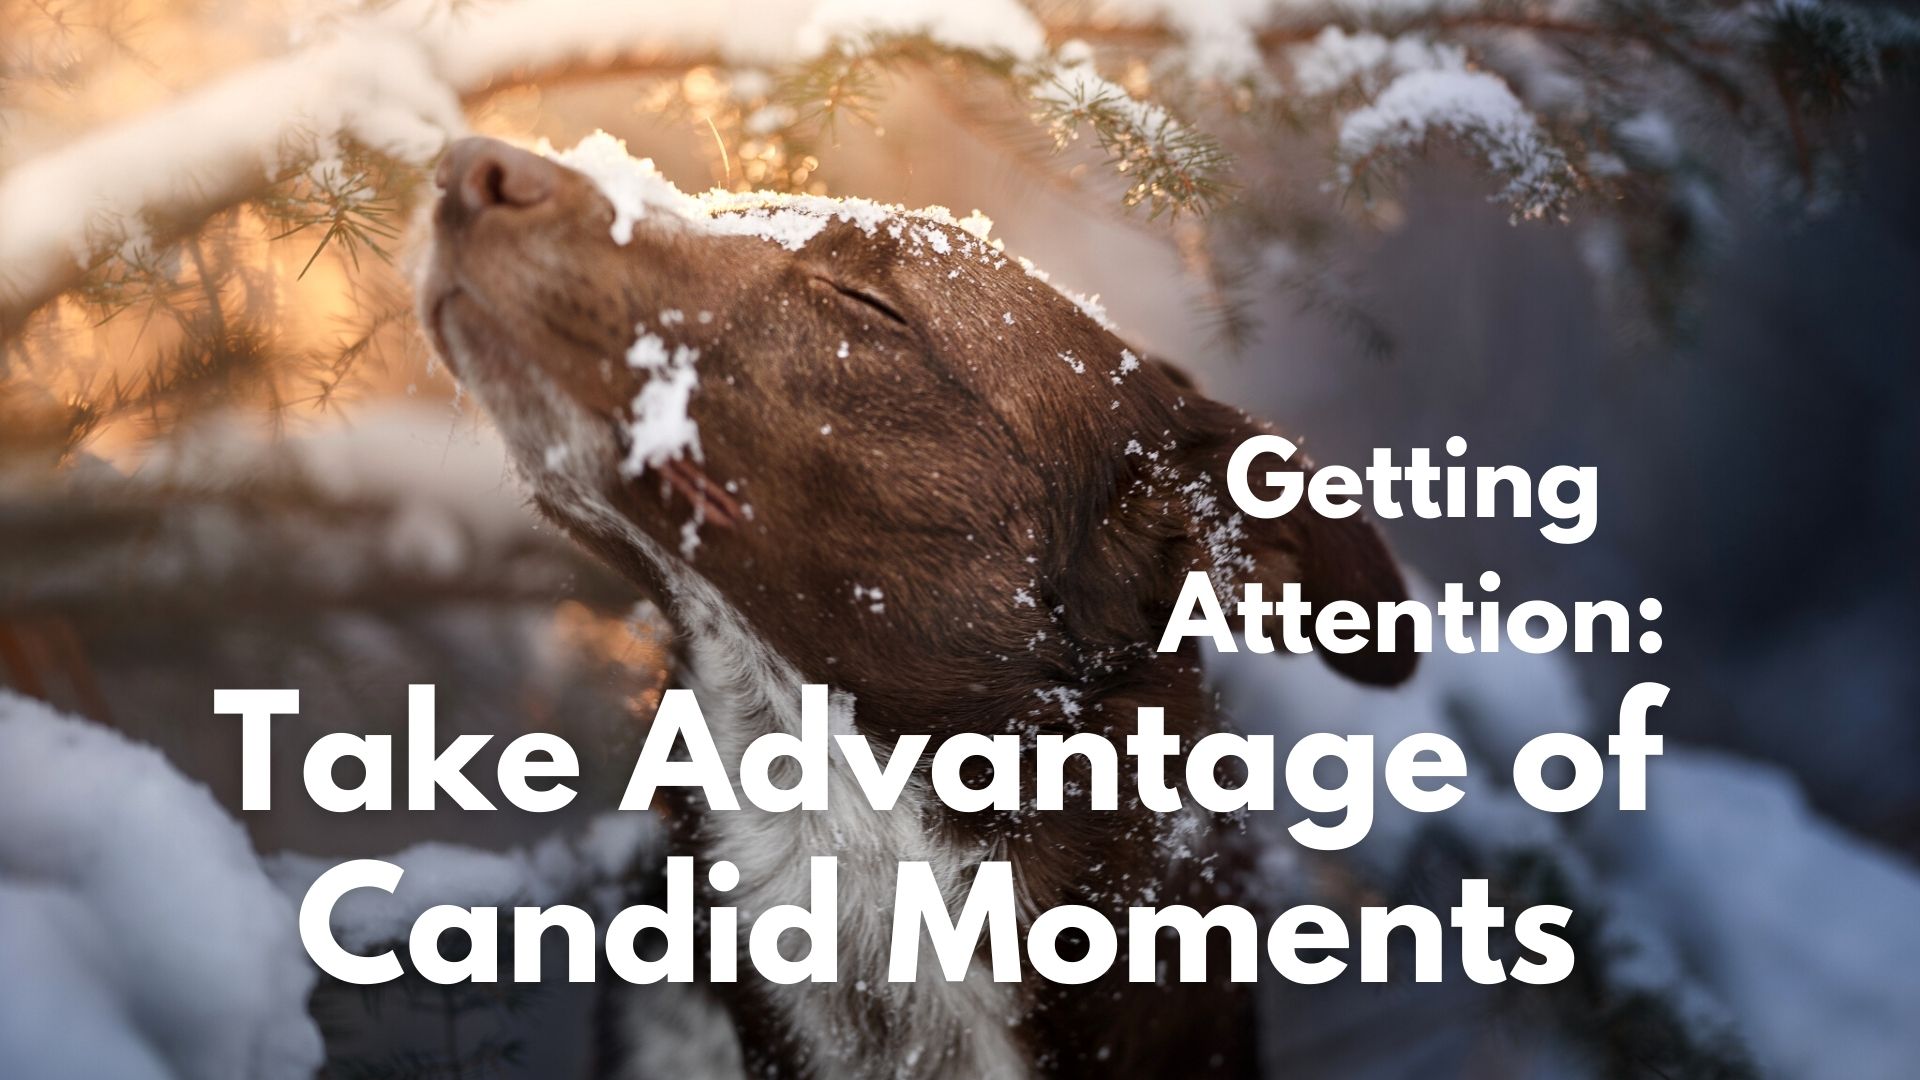 Take Advantage of Candid Moments